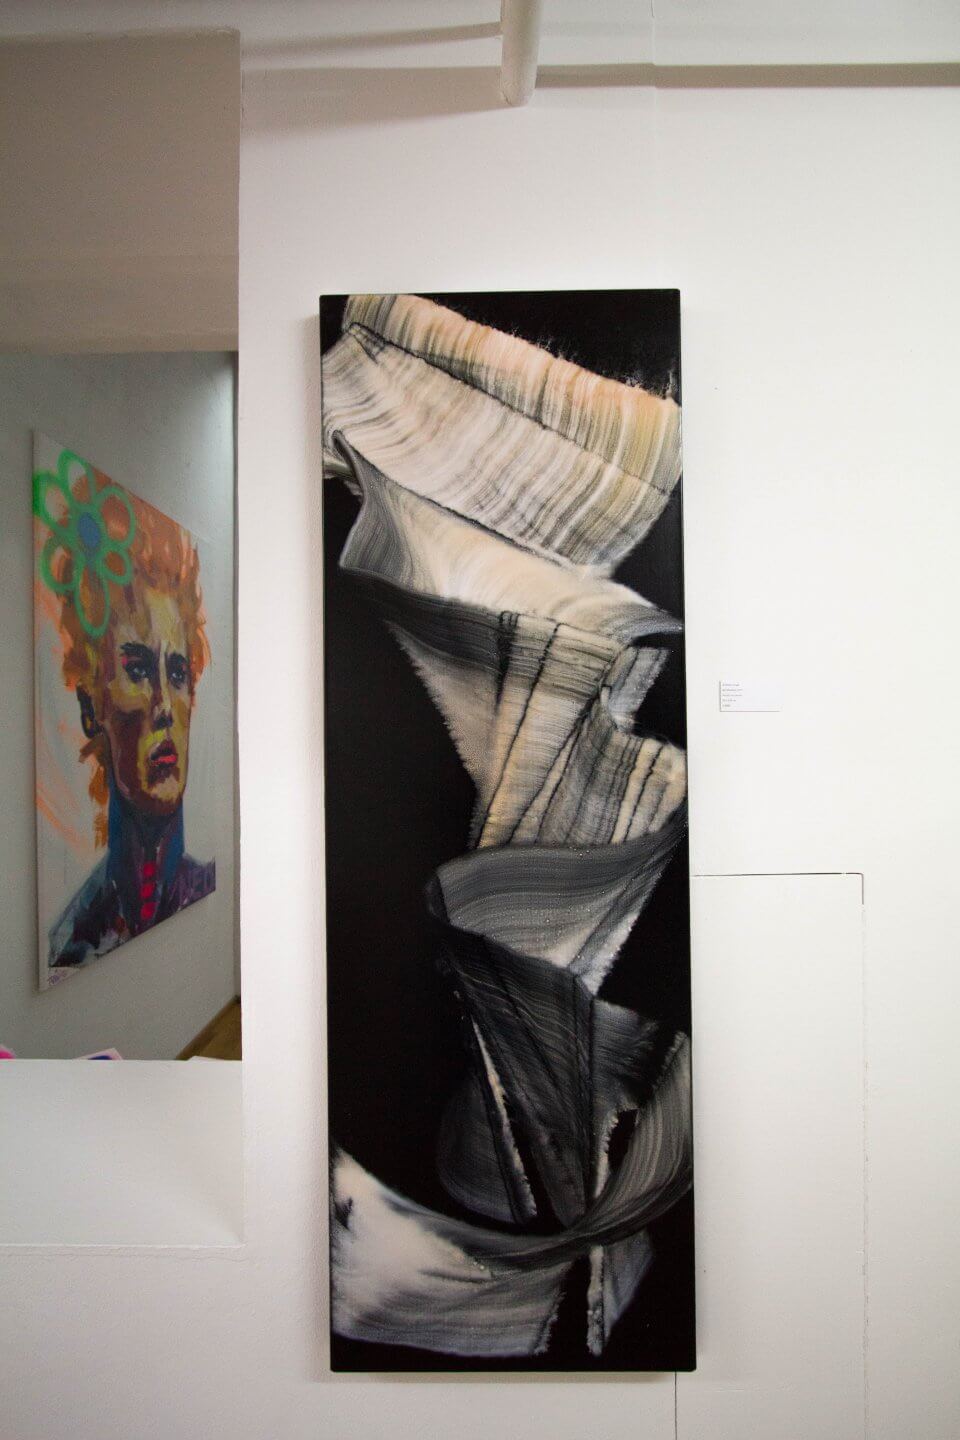 Galerie Benjamin Eck München Andreas Jungk, Blindfolded, 2017,
Acryl on canvas, 50 x 150 cm